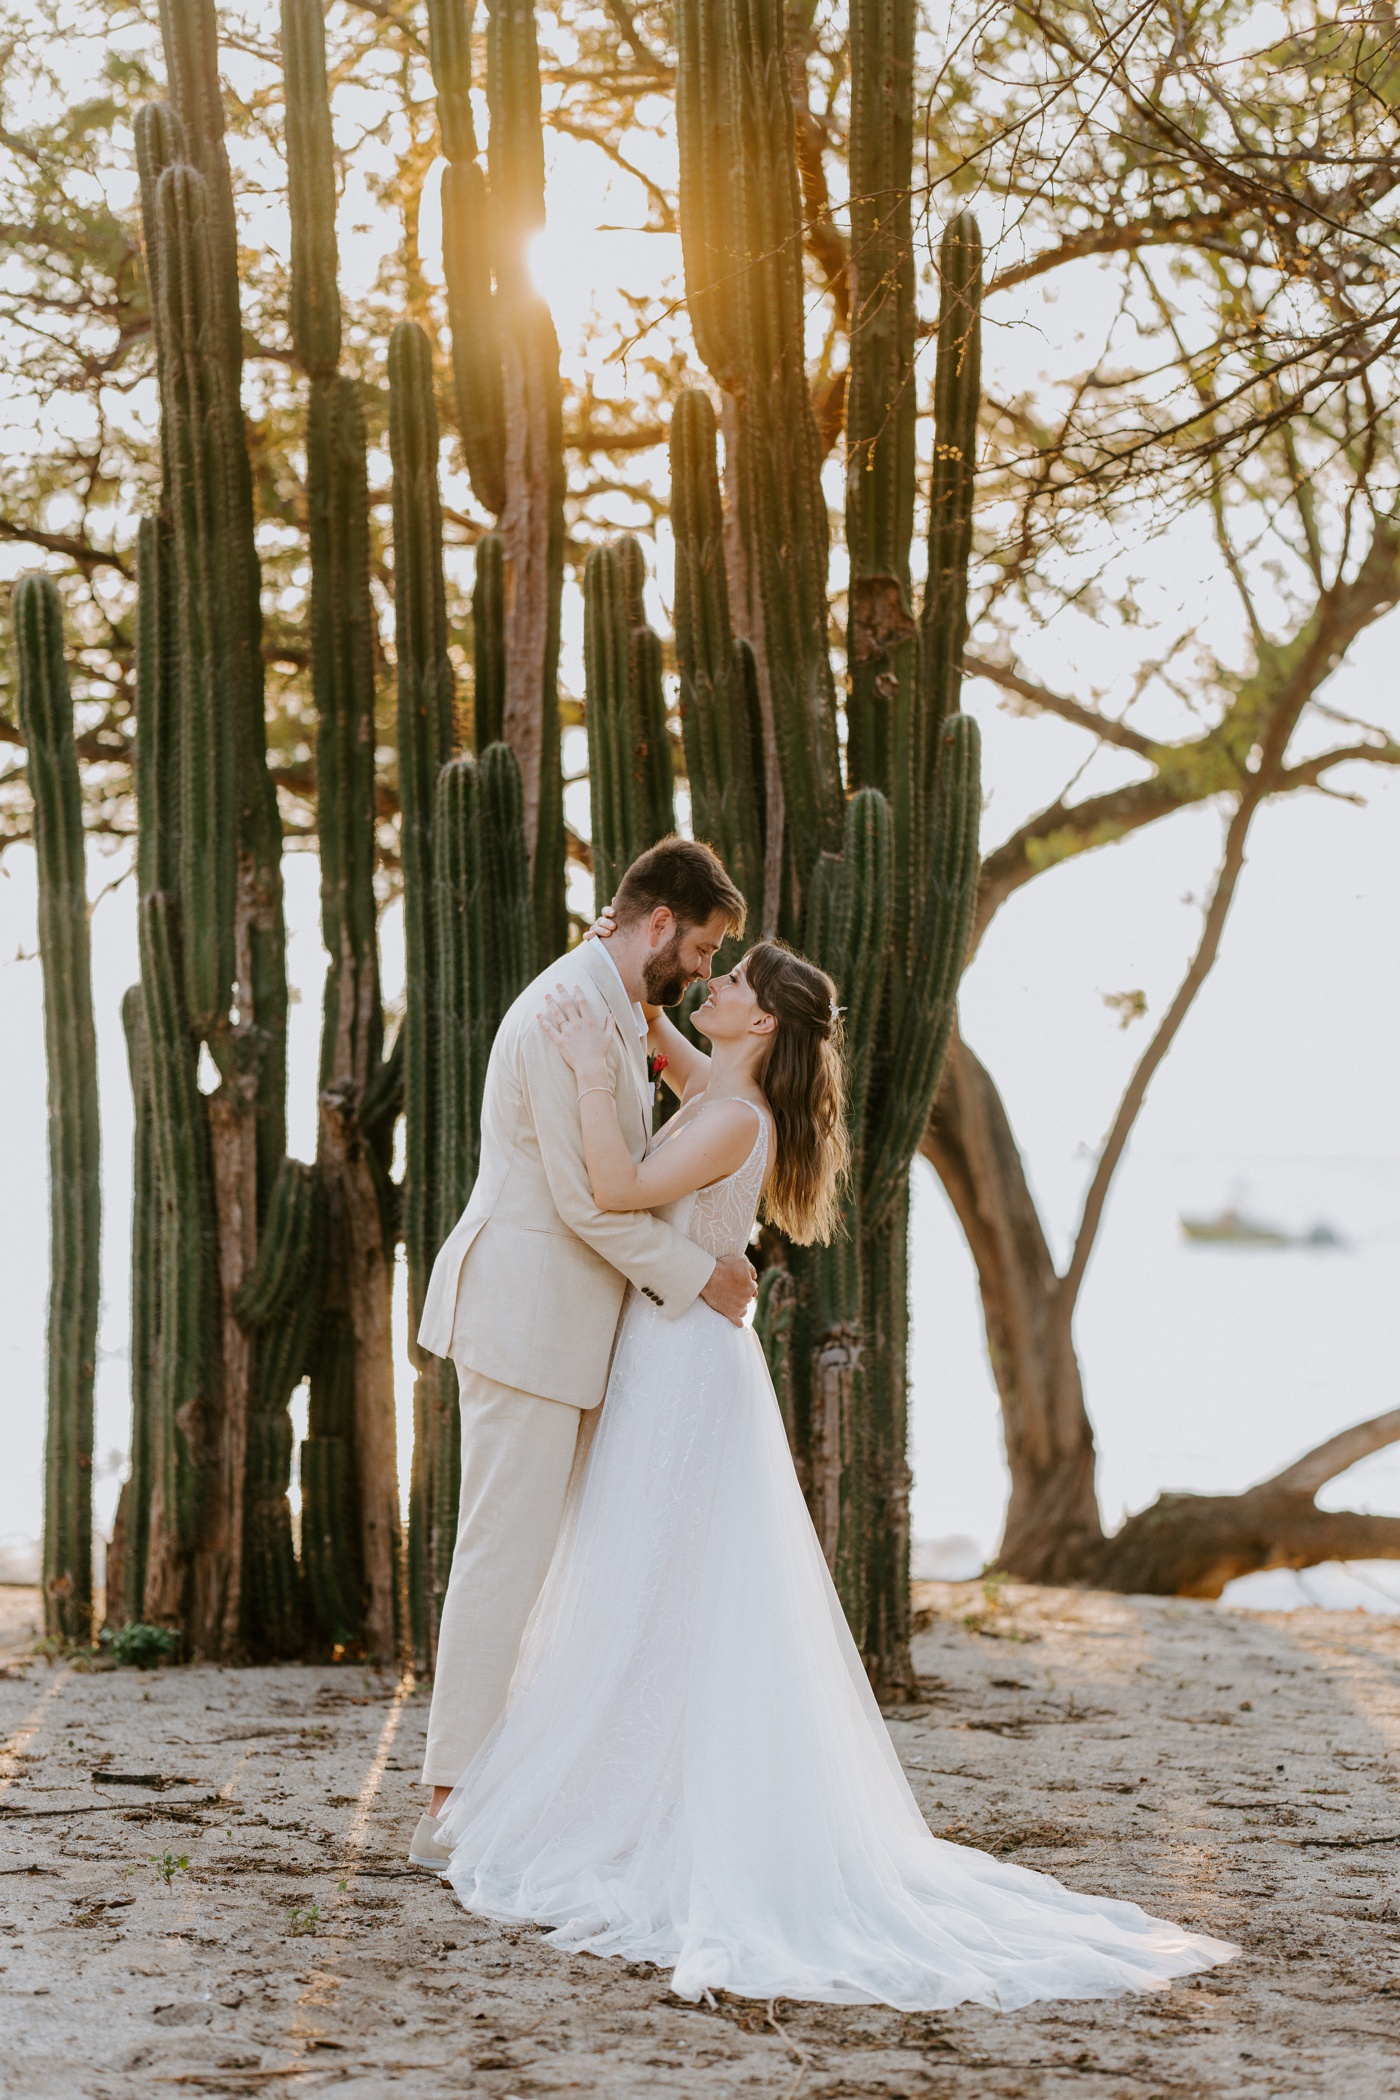 Sunset wedding photography on Arboleda Beach by Jenn Guillen